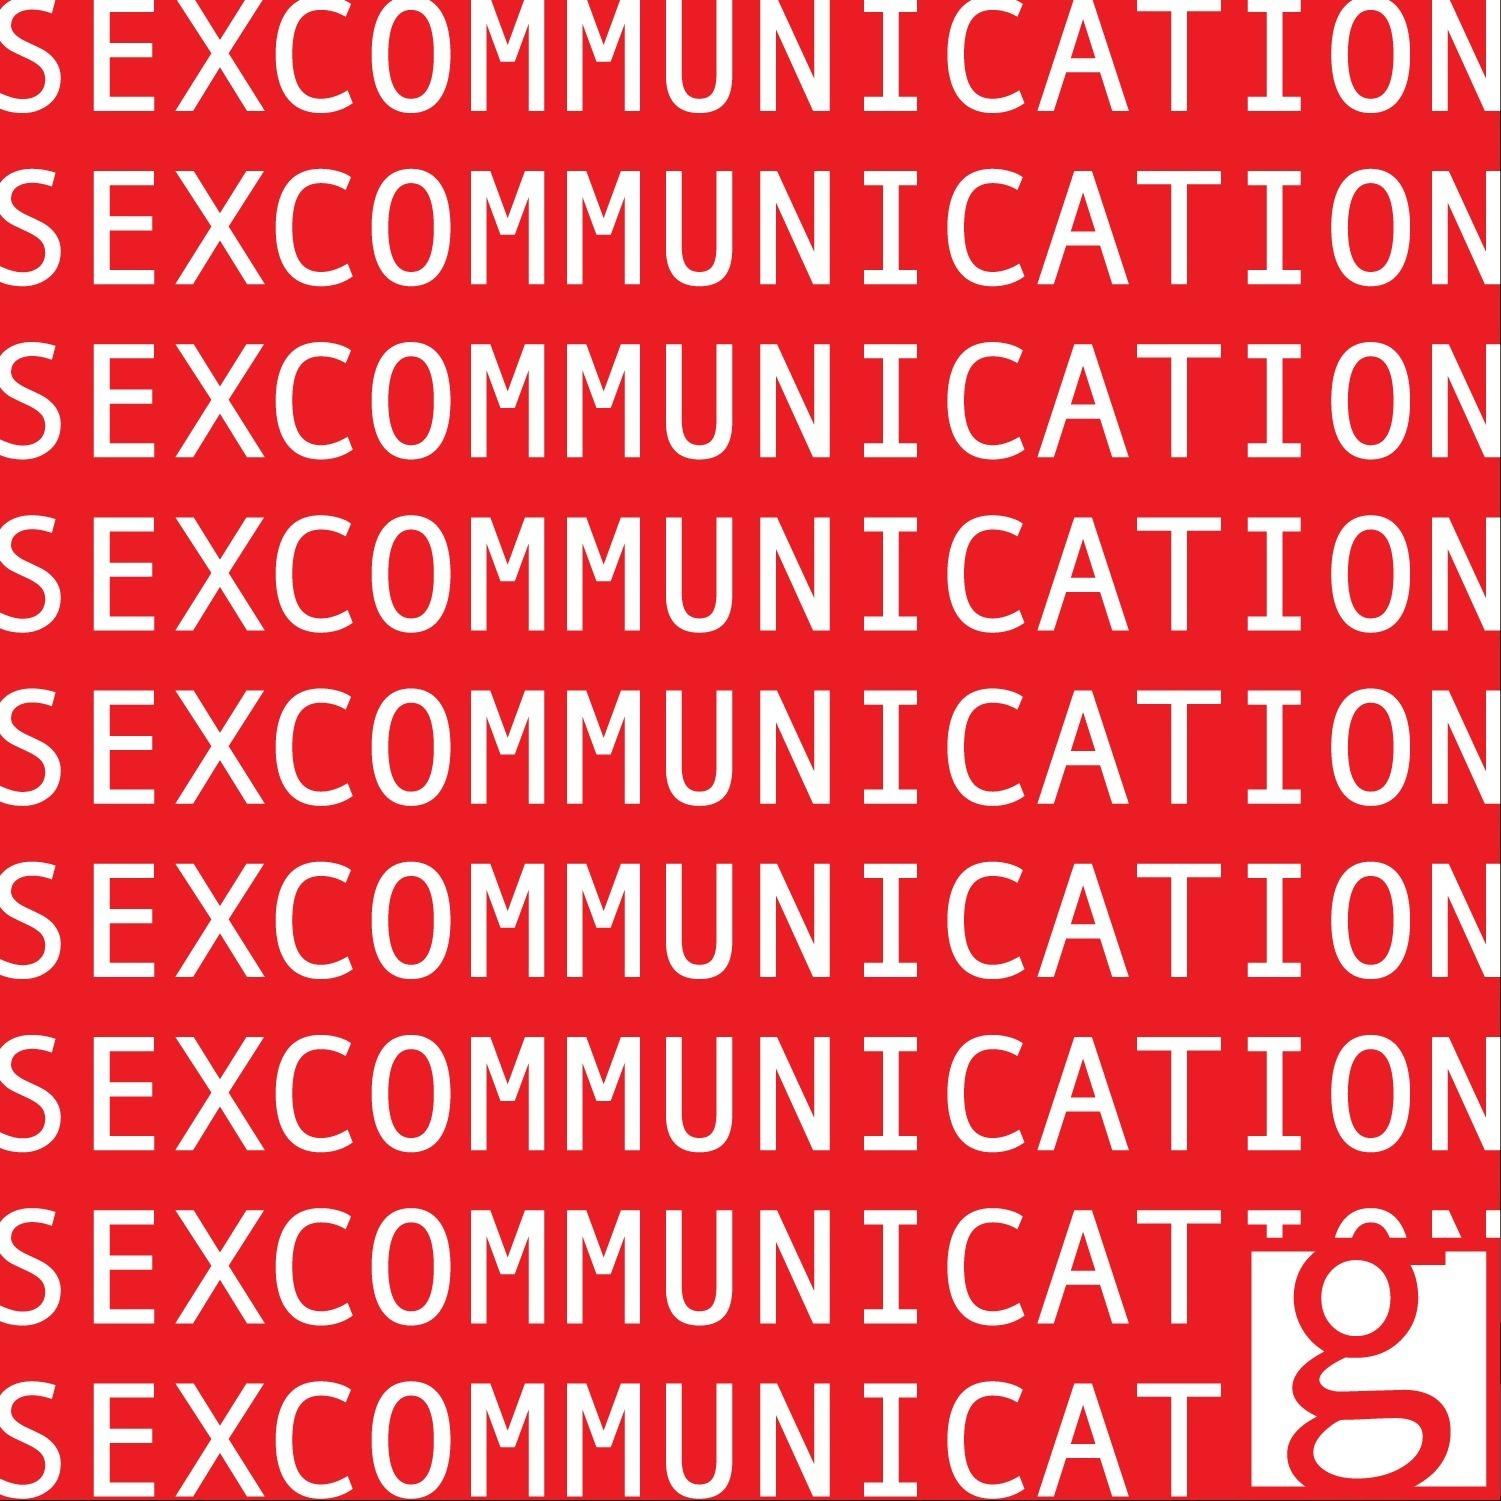 SEX COMMUNICATION